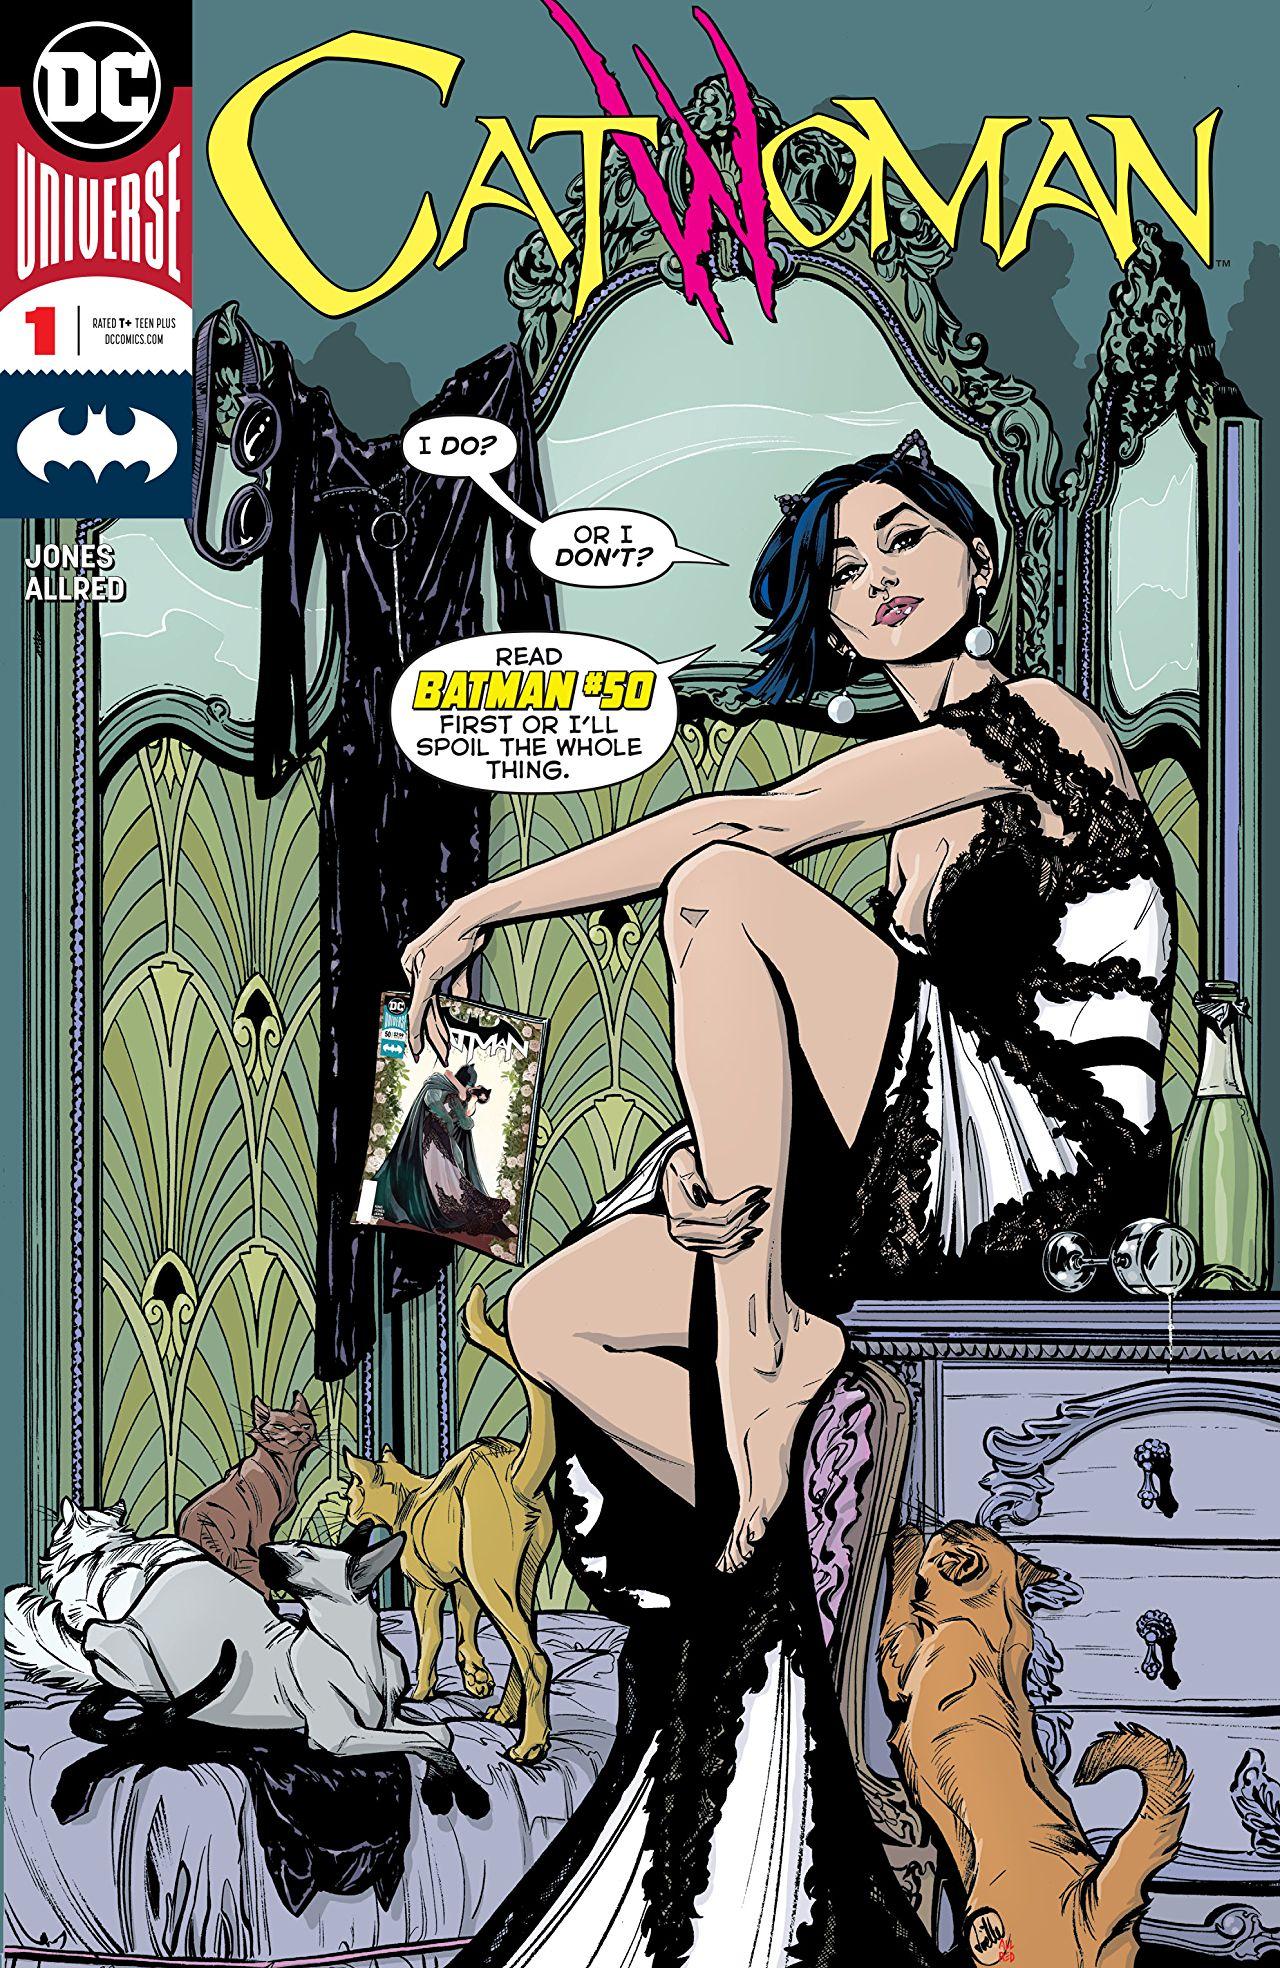 Catwoman Vol. 5 #1